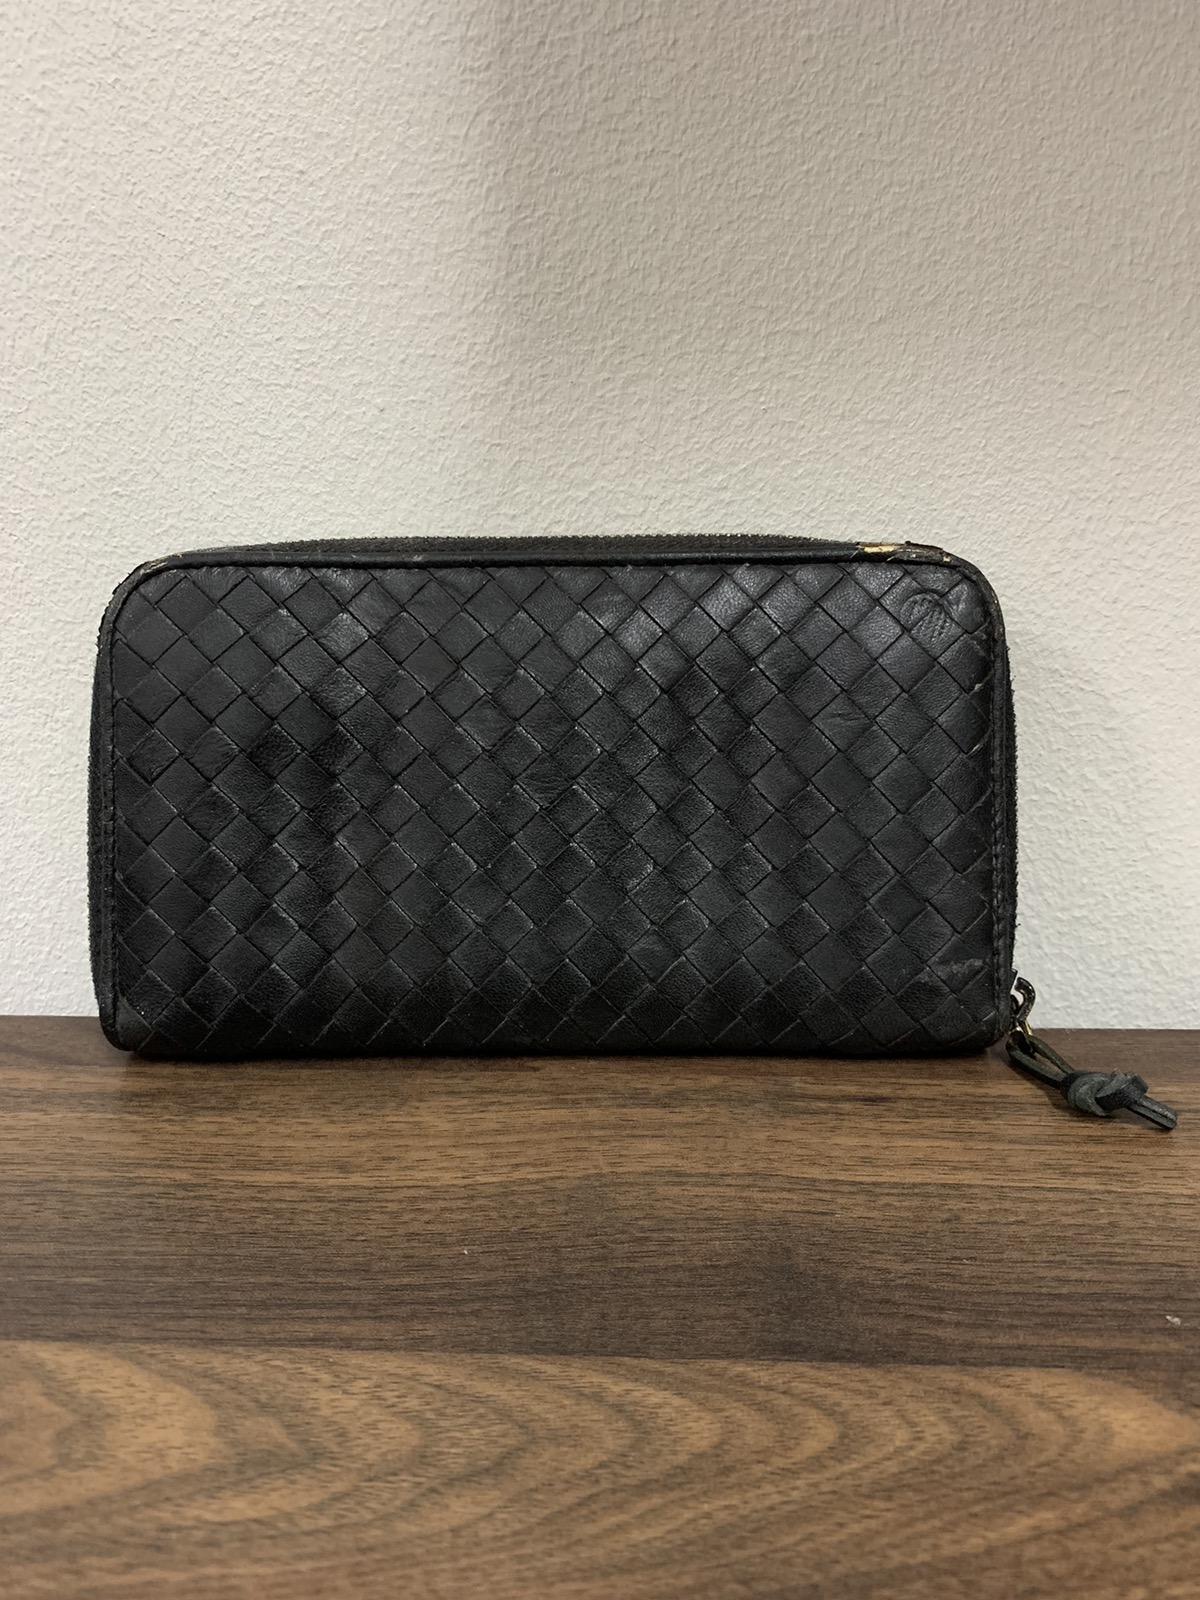 Bottega Veneta Black Leather Long Wallet Purse Unisex Wallet - 1